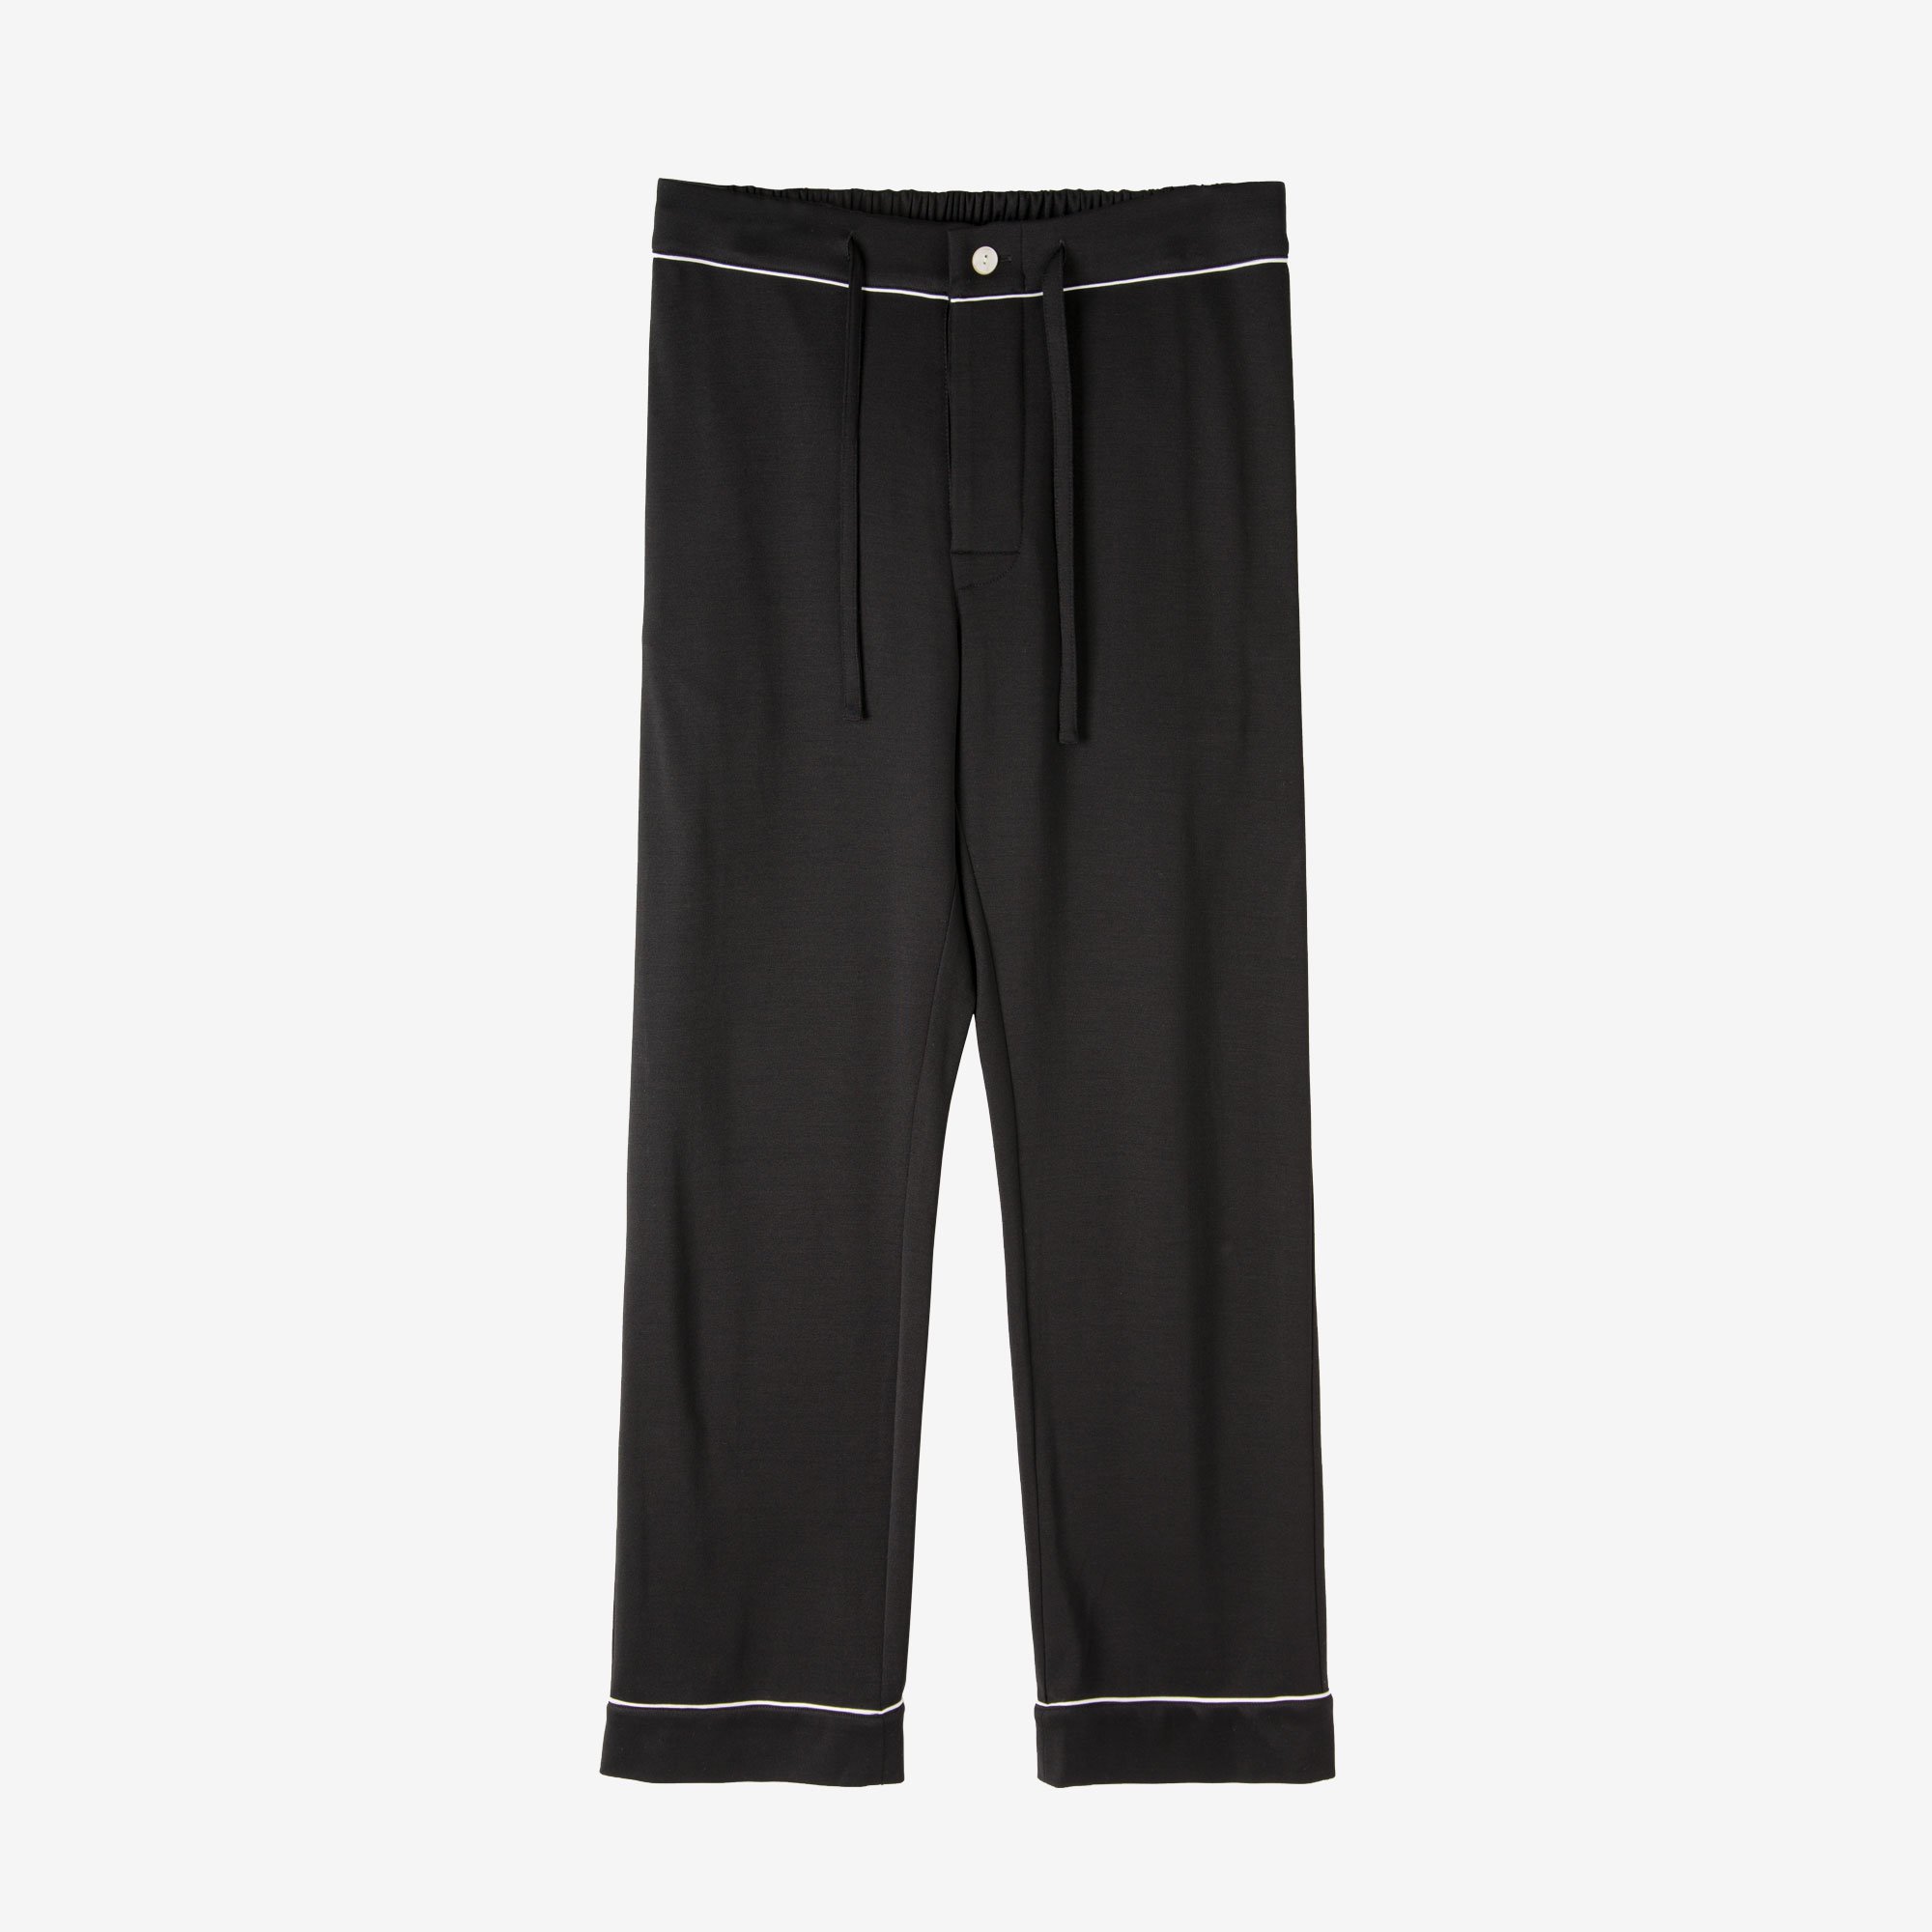 Spun Silk Pajama Pants / Black絹紡シルク パジャマパンツ / ブラック - LOOK SEA ONLINE SHOP